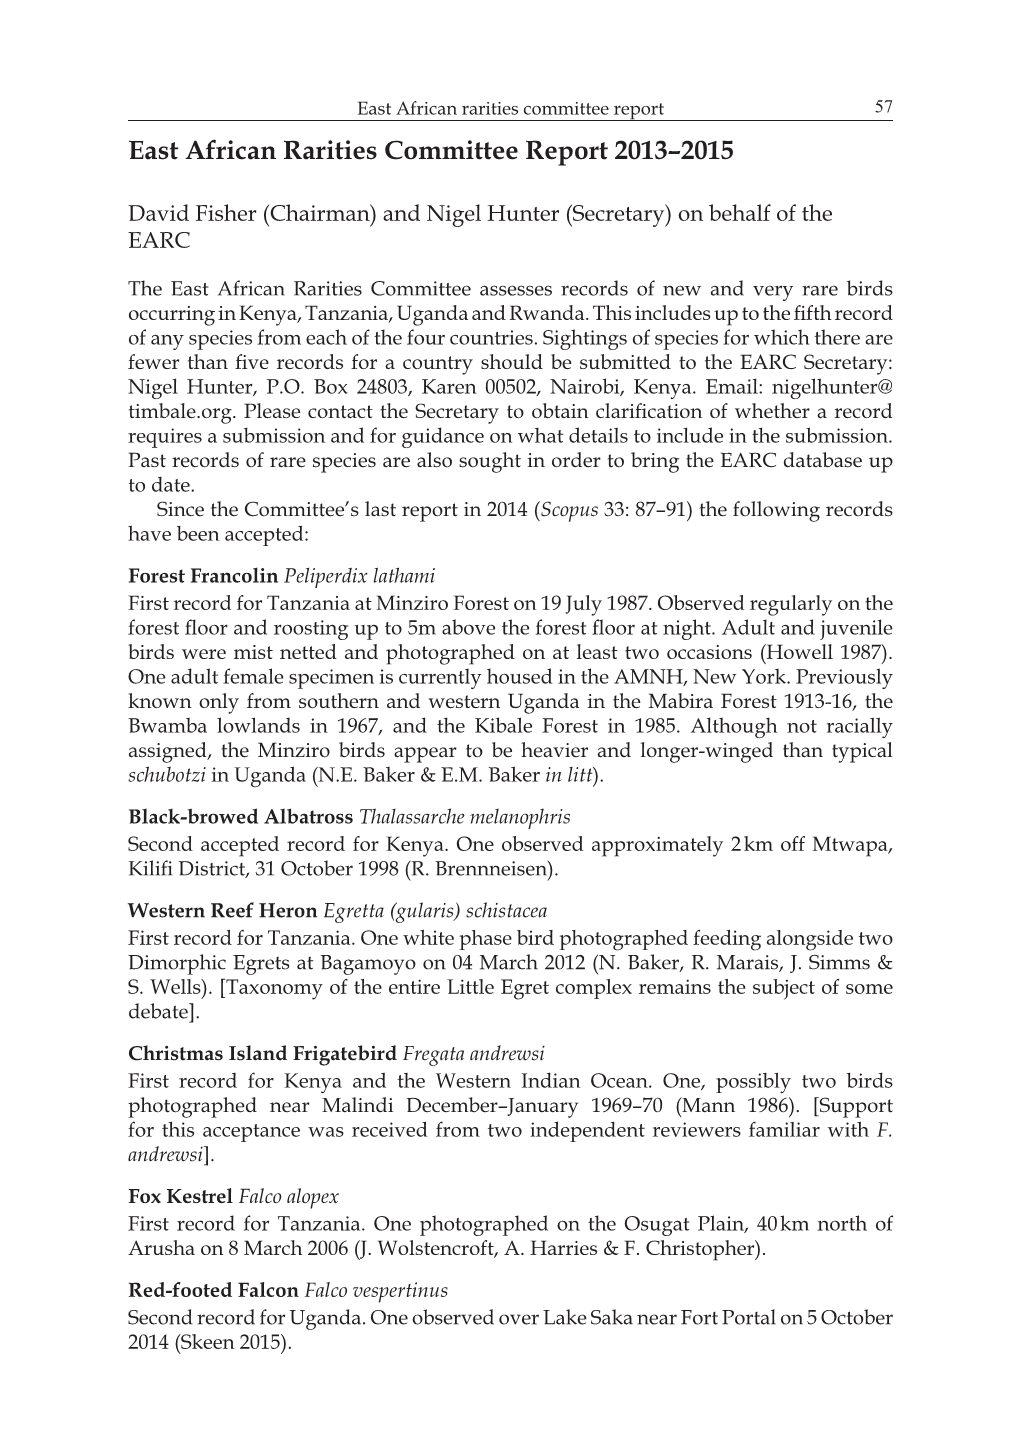 Fisher, D. & Hunter, N. 2016. East African Rarities Committee Report 2013–2015. Scopus 36